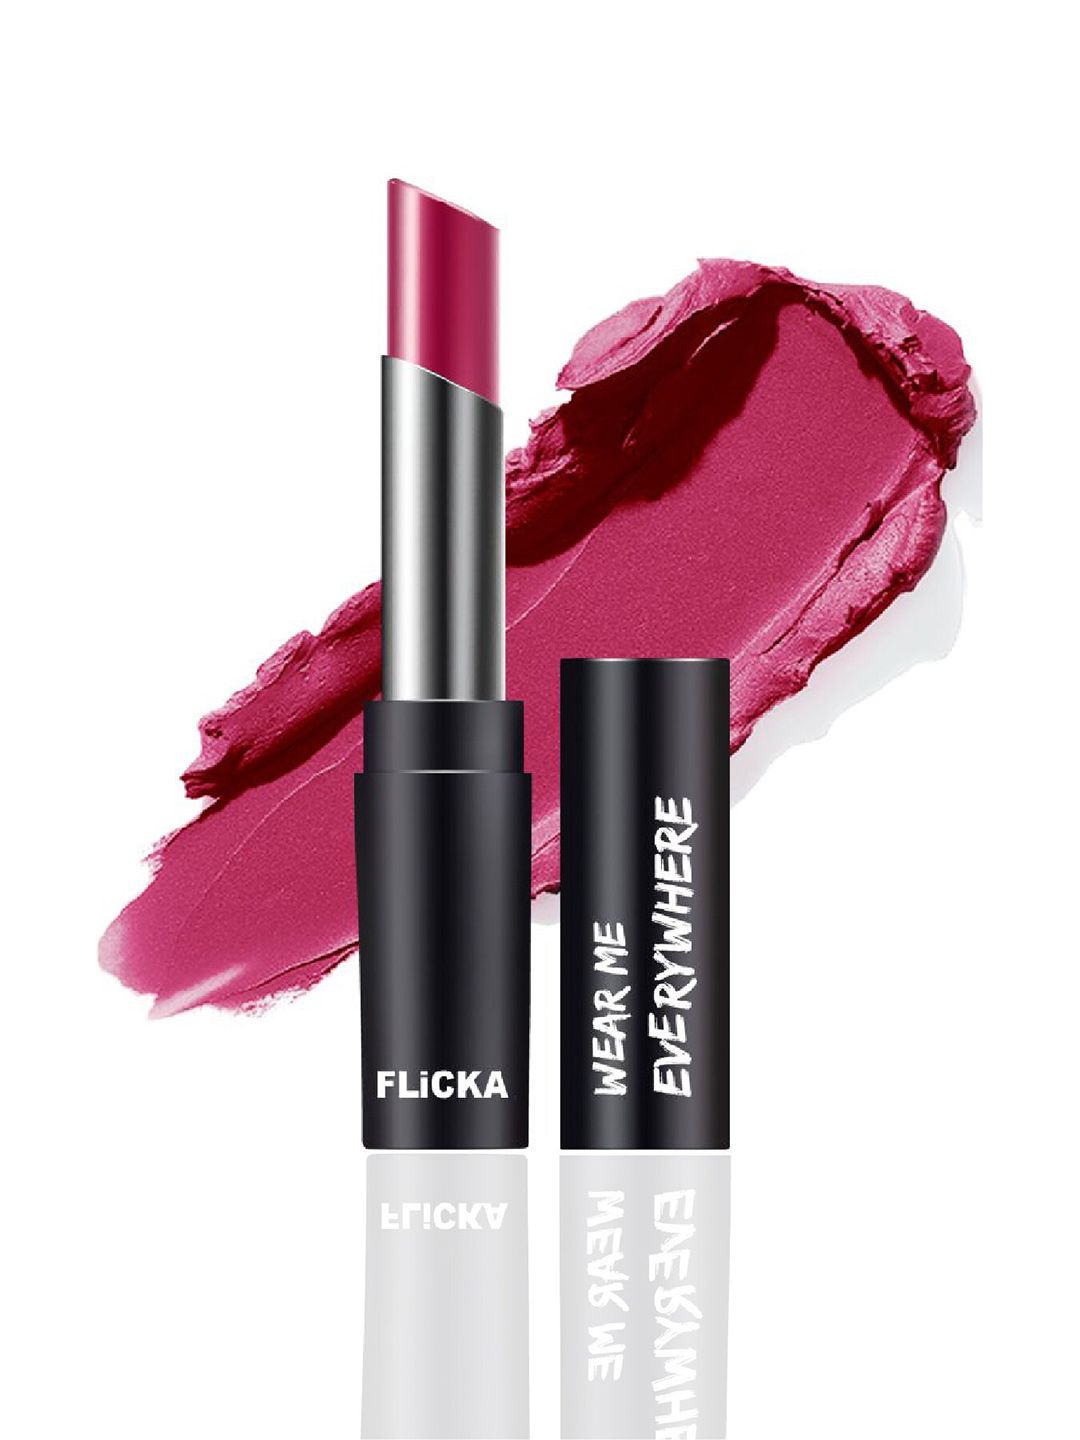 FLiCKA Wear Me Everywhere Creamy Matte Lipstick - The Cherry Pie 07 Price in India